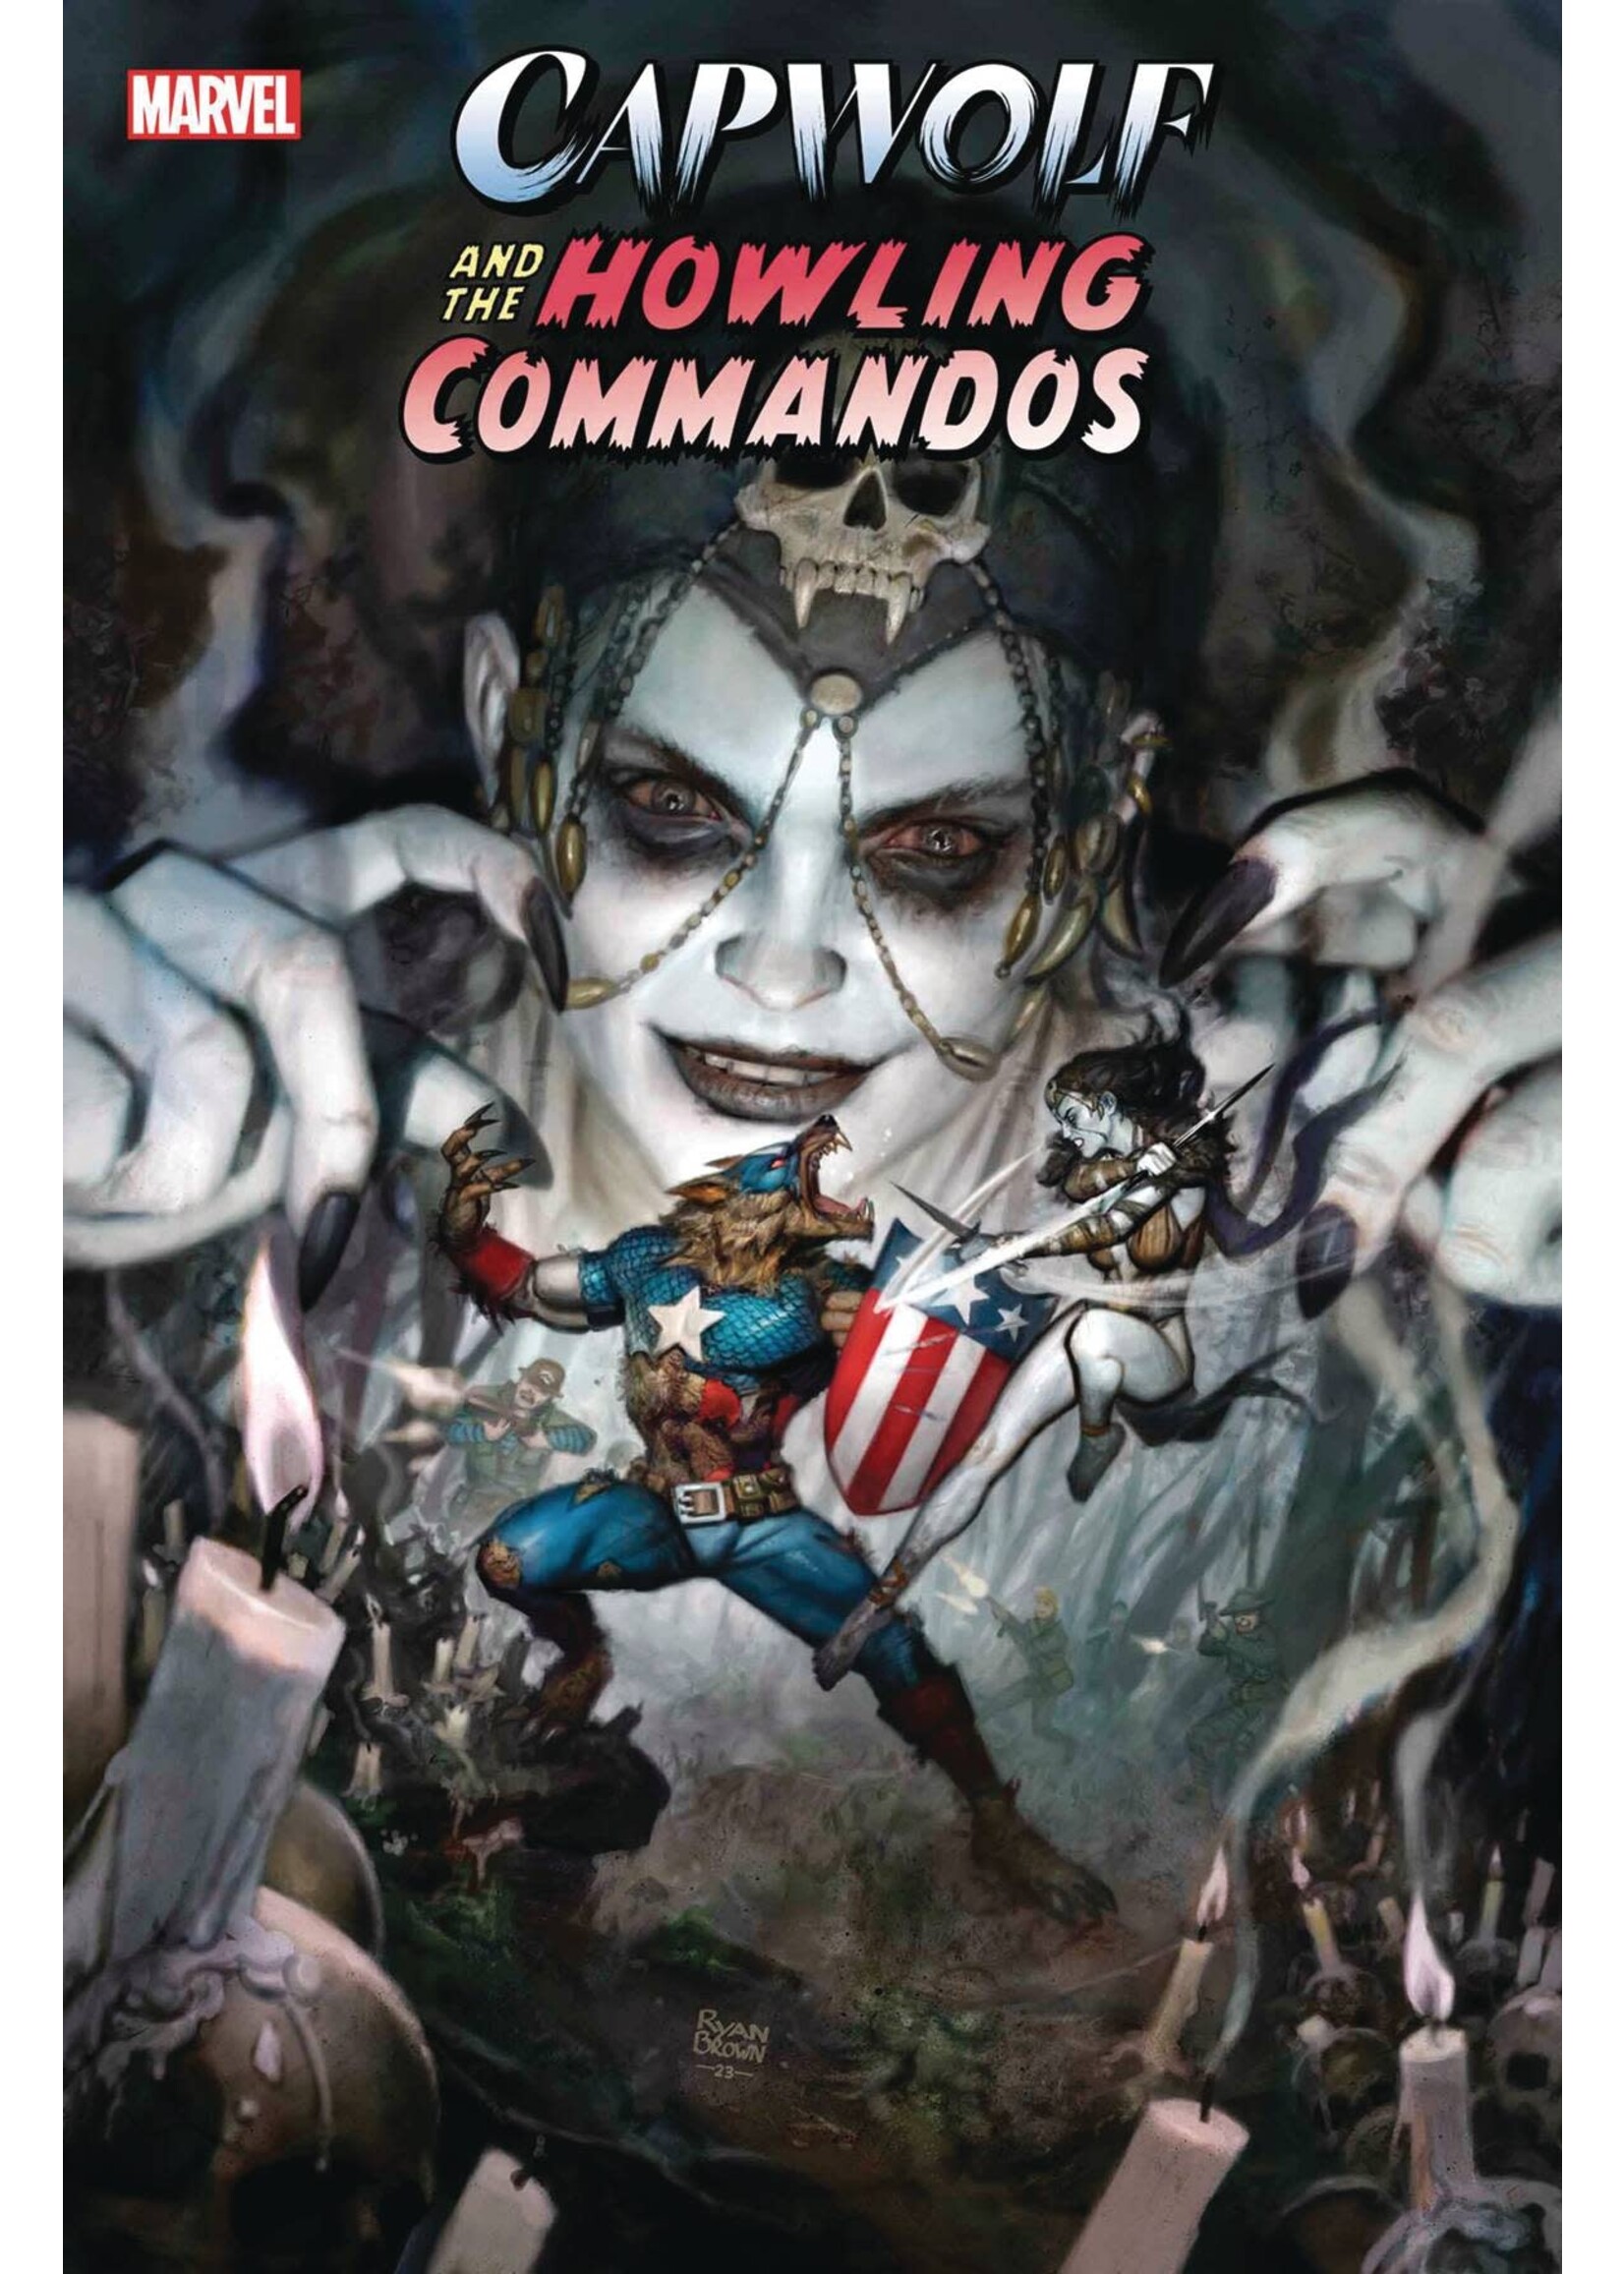 MARVEL COMICS CAPWOLF HOWLING COMMANDOS #3